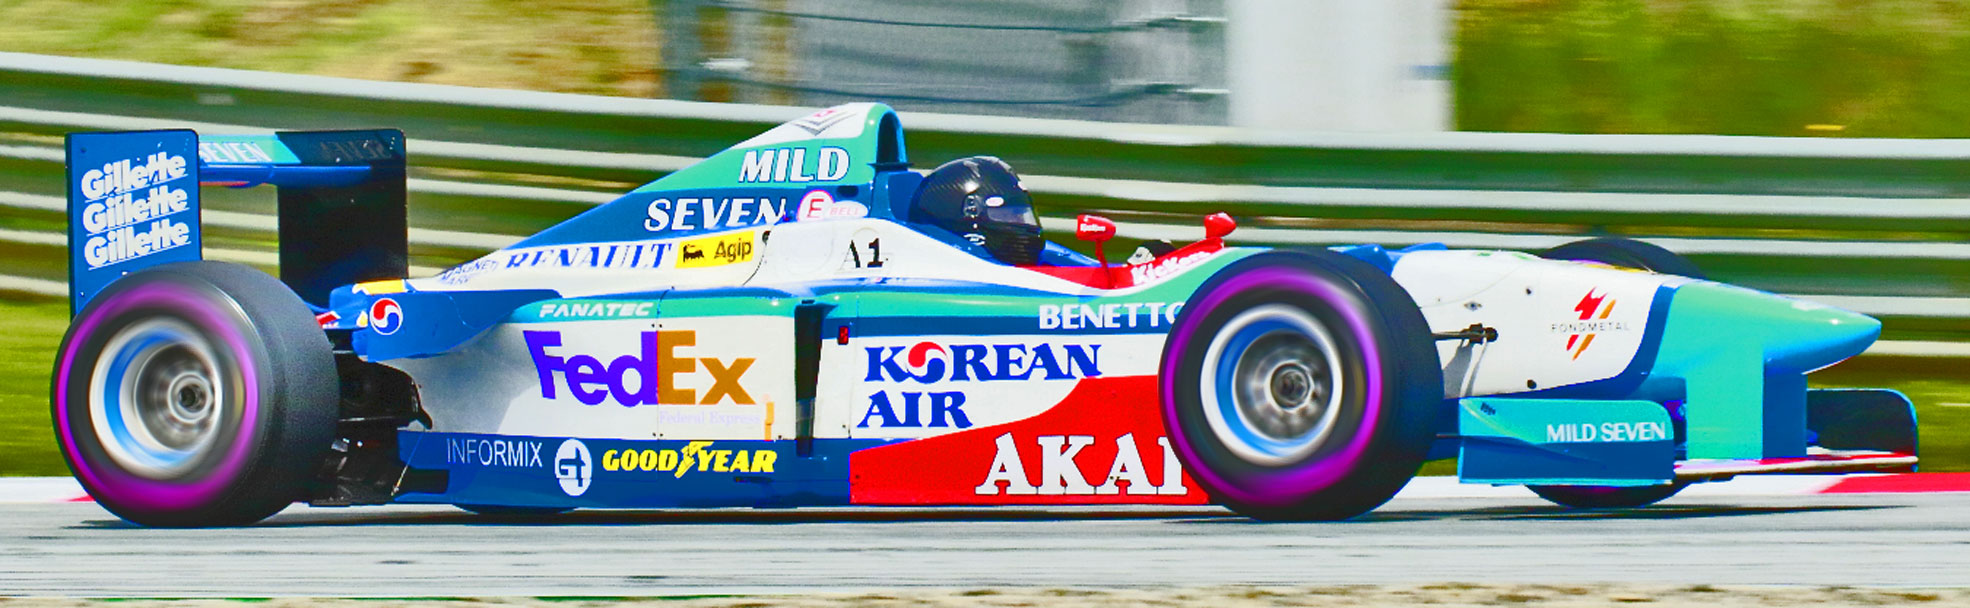 Benetton B197 - F1